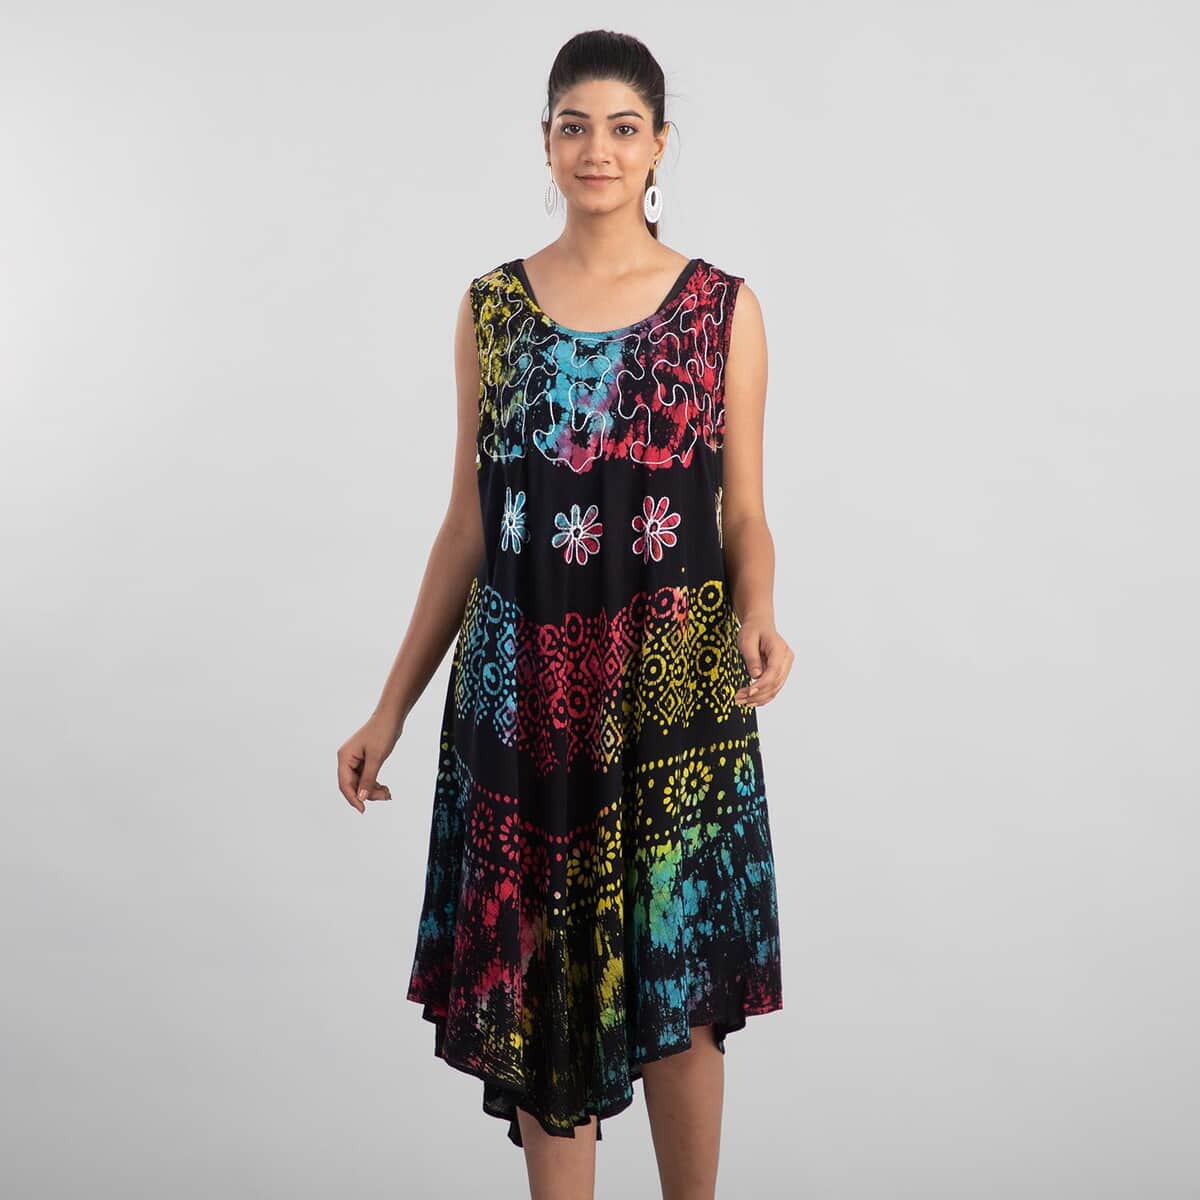 TAMSY Rainbow and Black Splatter Print Umbrella Dress - One Size Fits Most (48"L x 44"W) image number 0